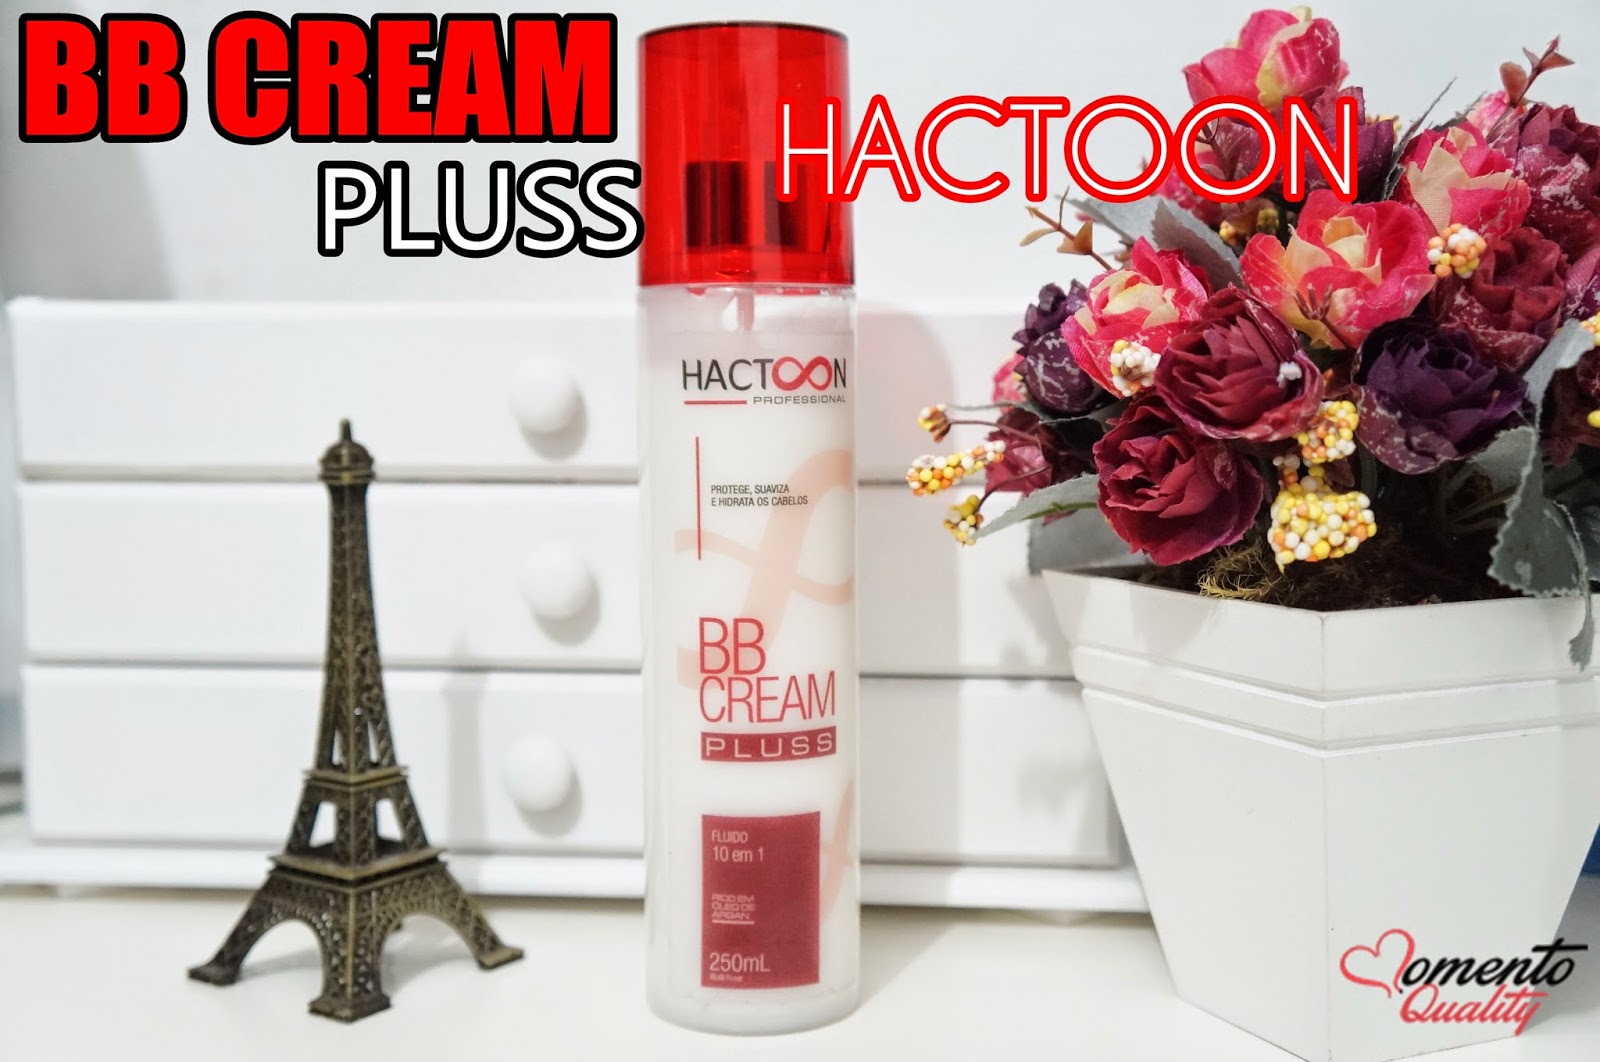 BB Cream Pluss - Hactoon